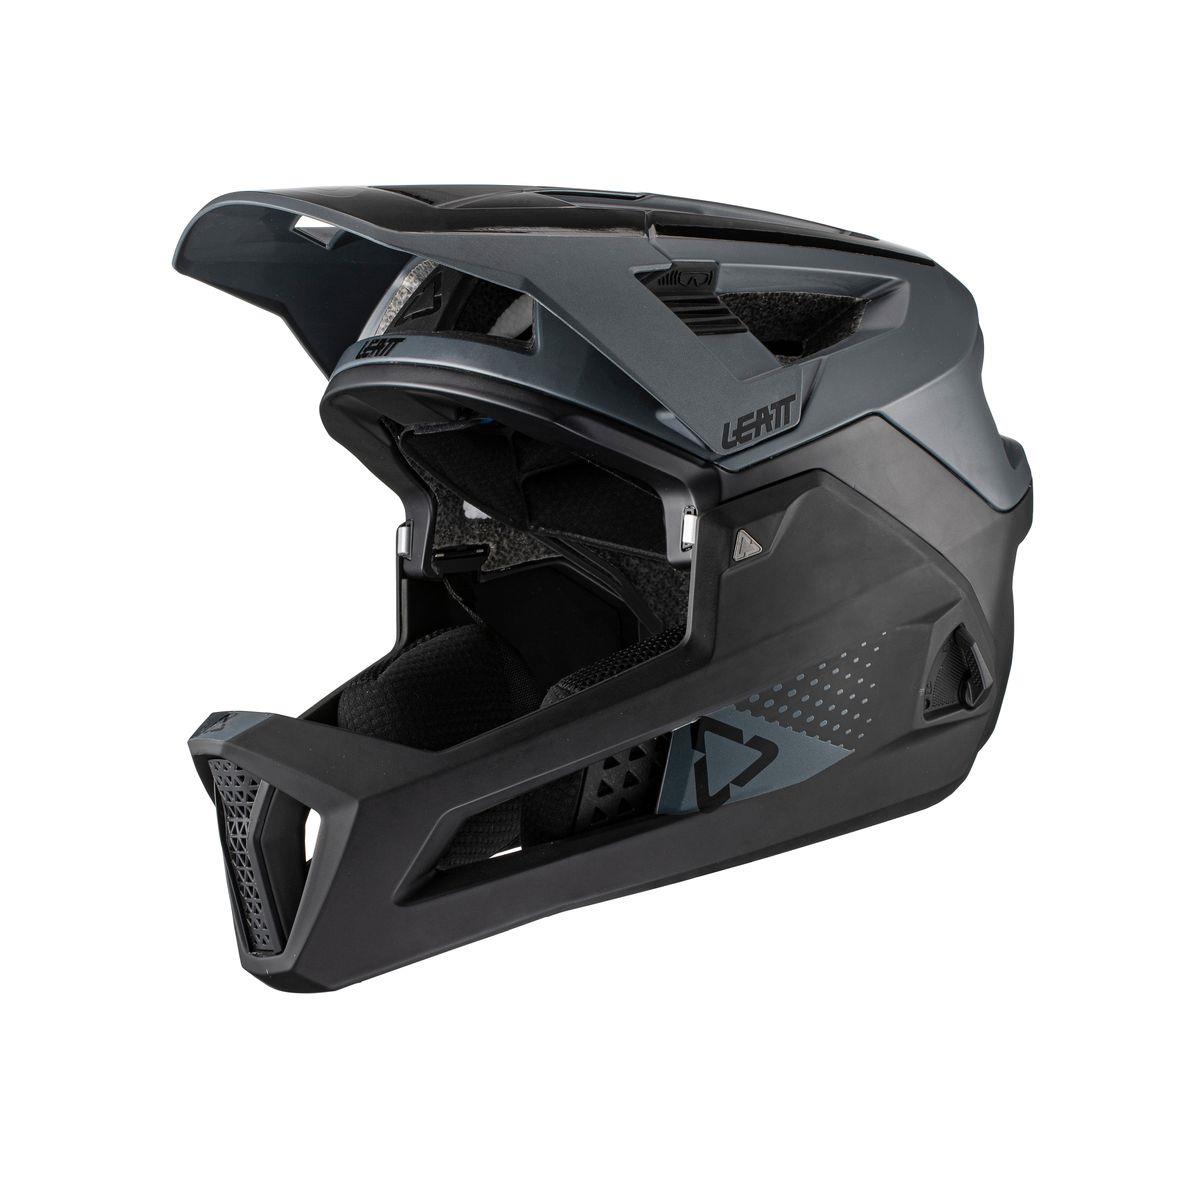 Full-Face Helmet MTB 4.0 Enduro Removable Chinguard Black/Grey Size S (51-55cm)